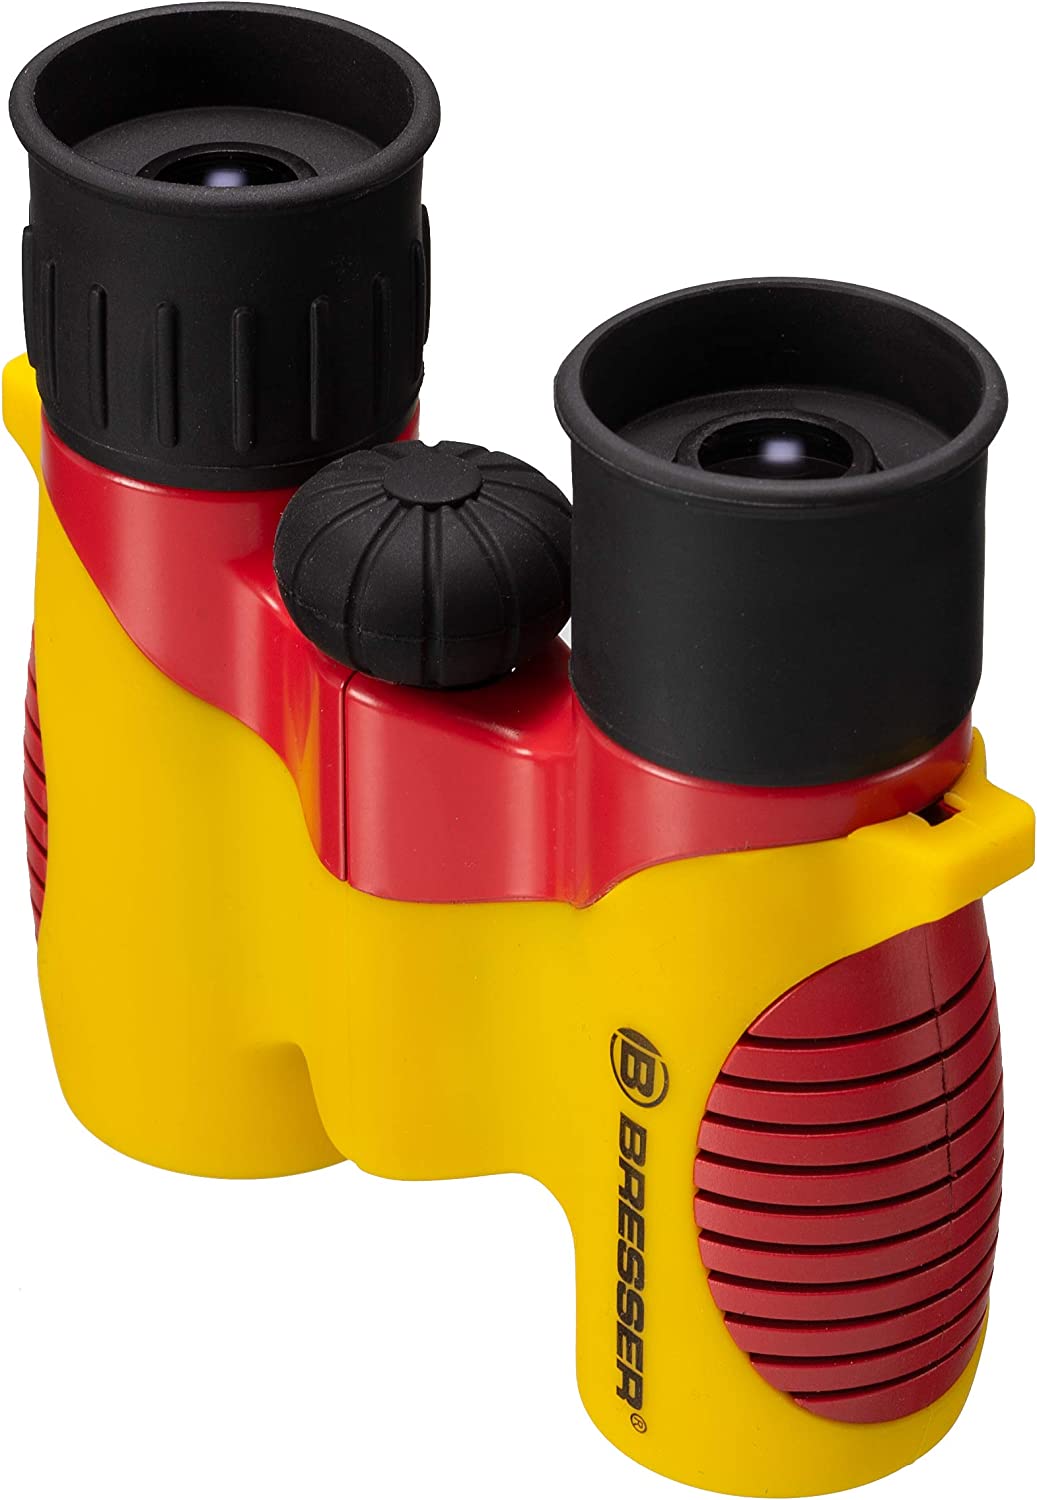 BRESSER Junior 6x21 Childrens Binoculars for Kids - Yellow